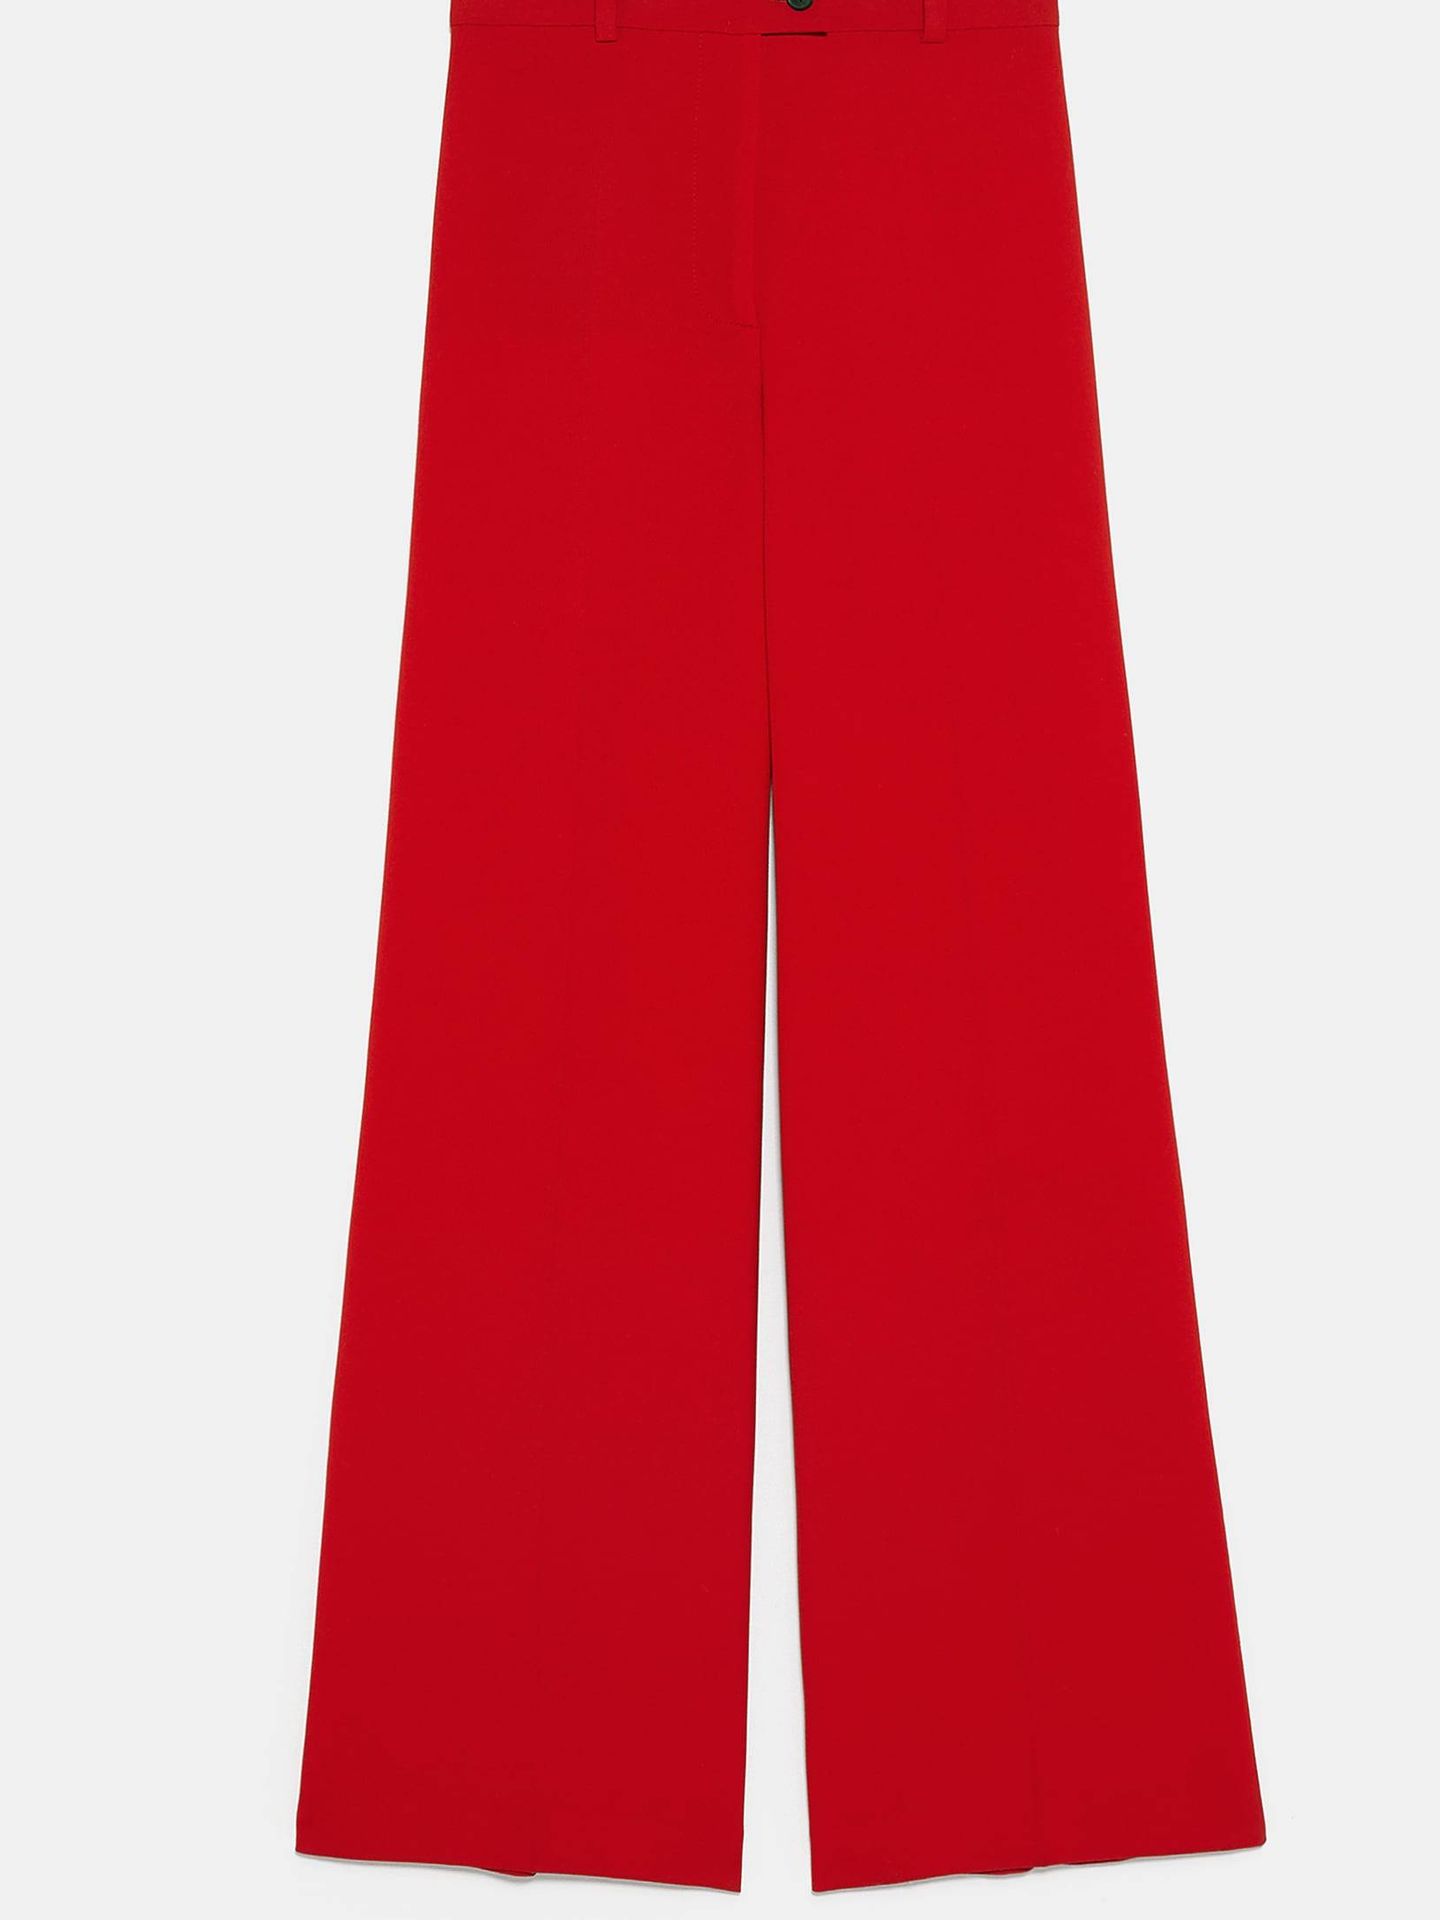 Pantalones de Zara.